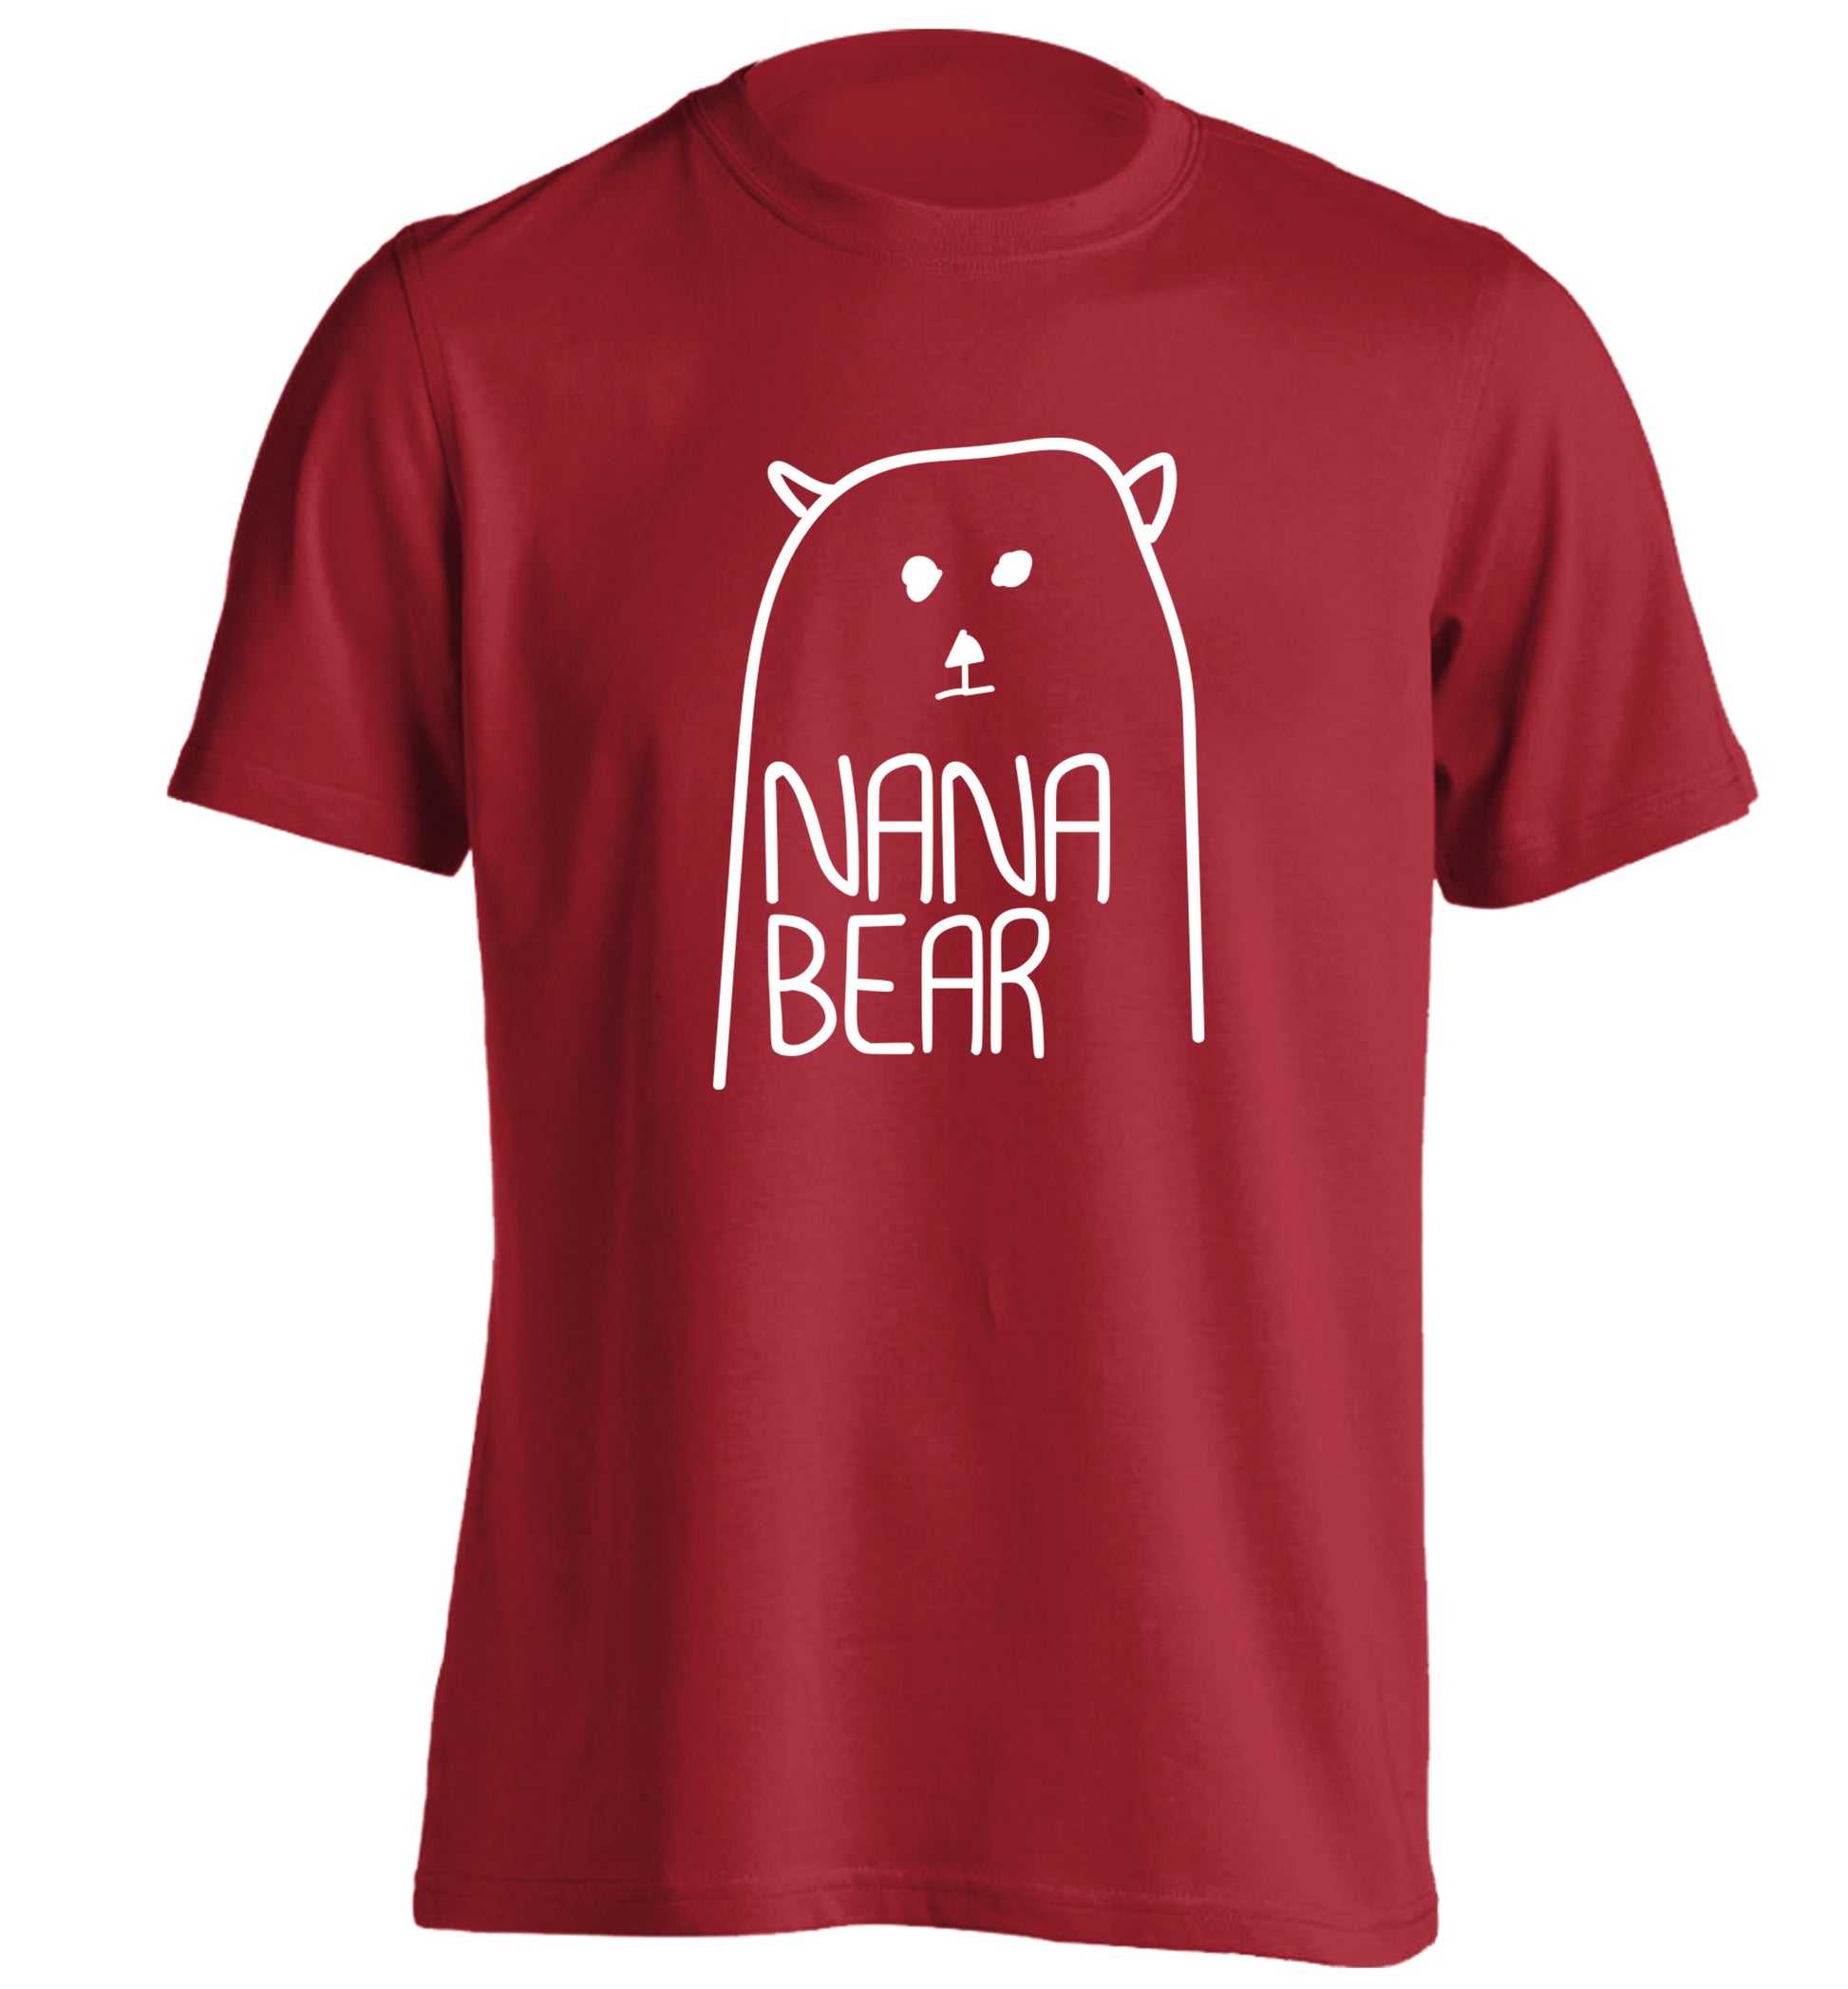 Nana bear adults unisex red Tshirt 2XL